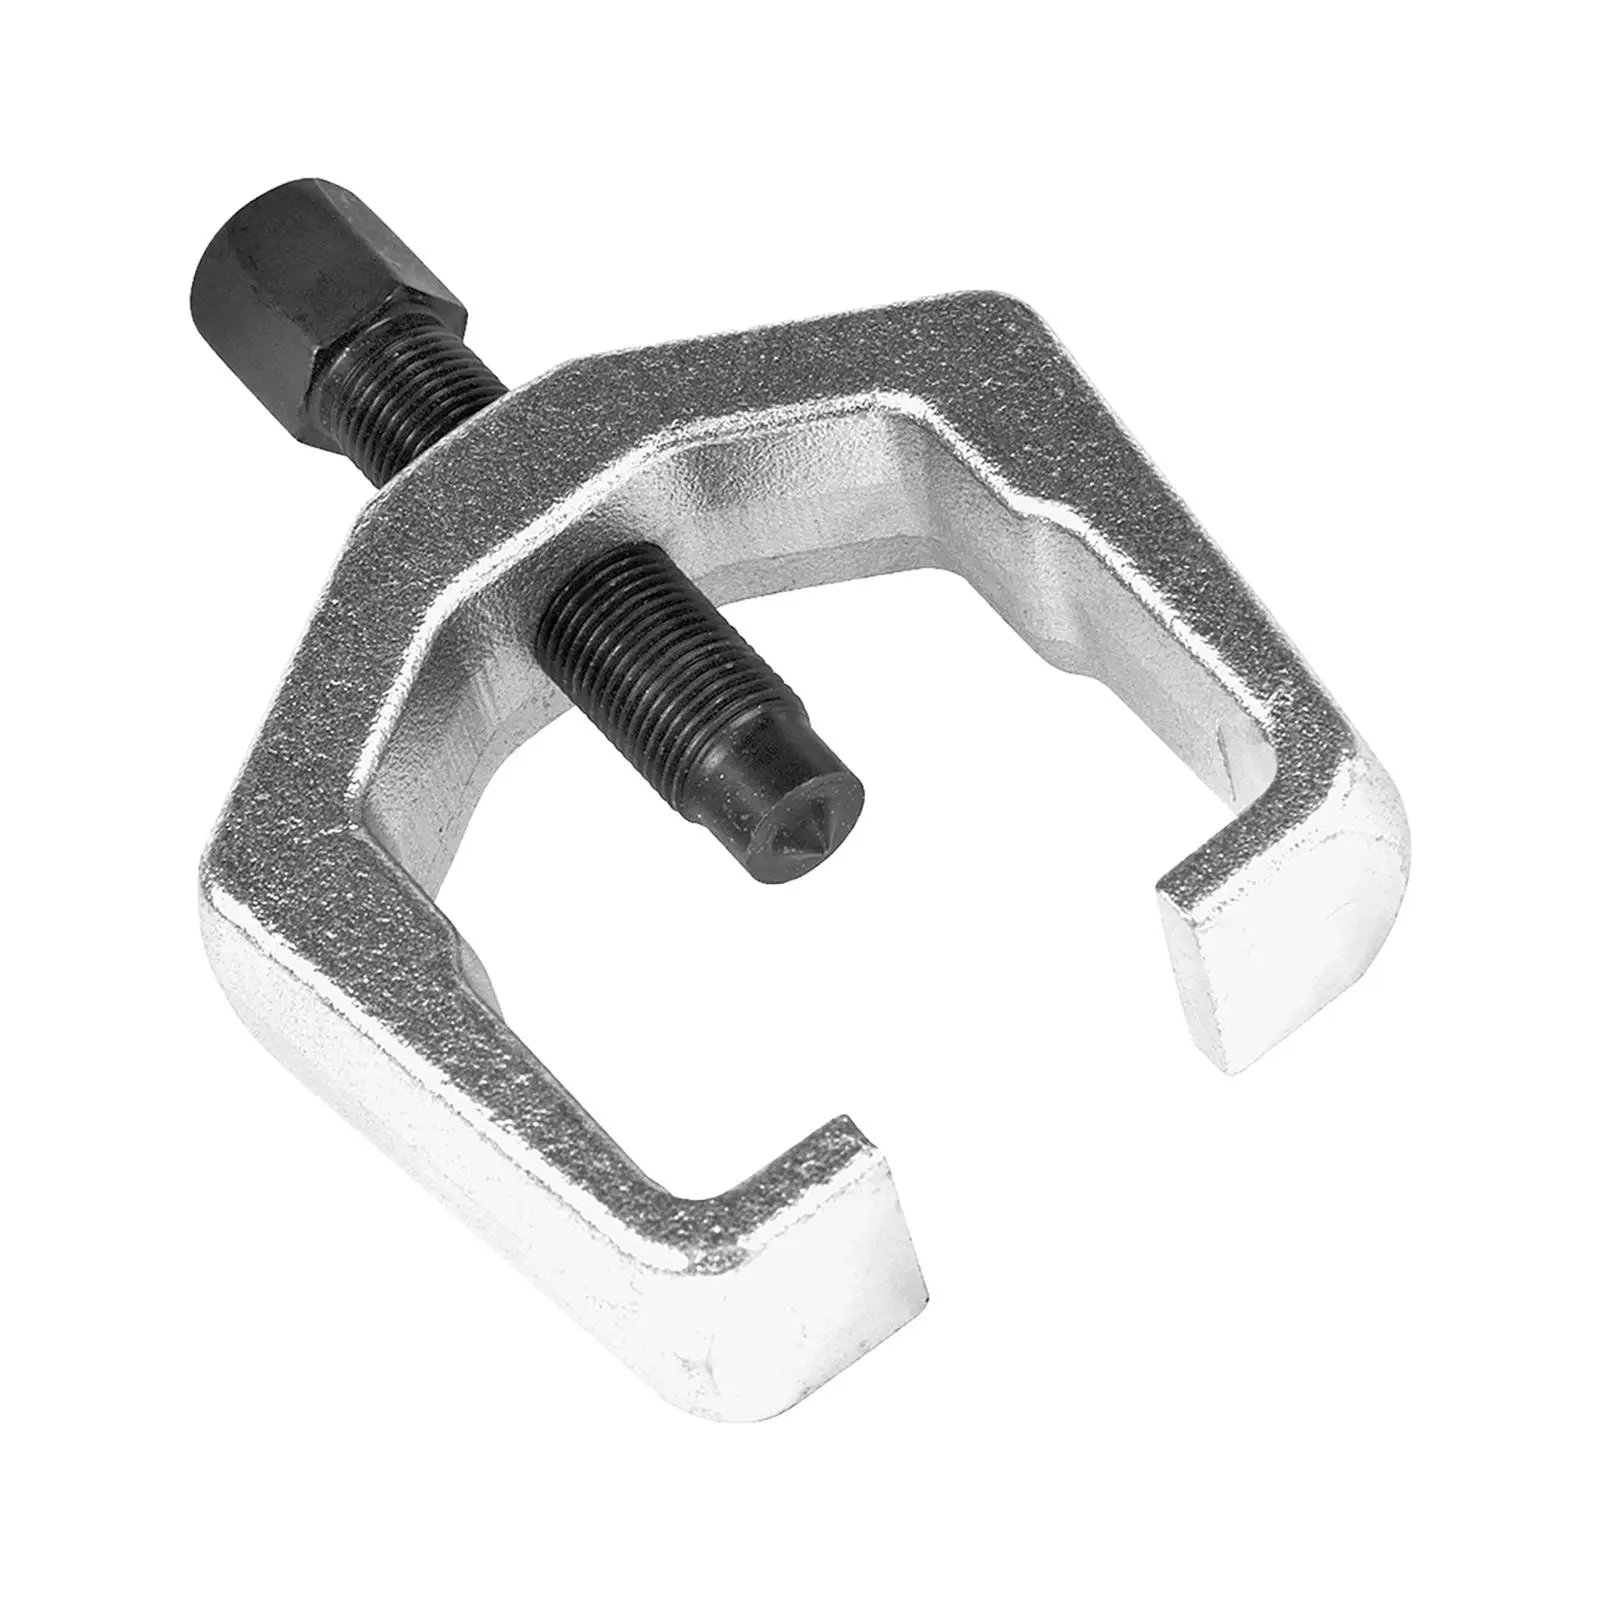 Slack Adjuster Puller Iron Works on Automatic Adjusters Durable